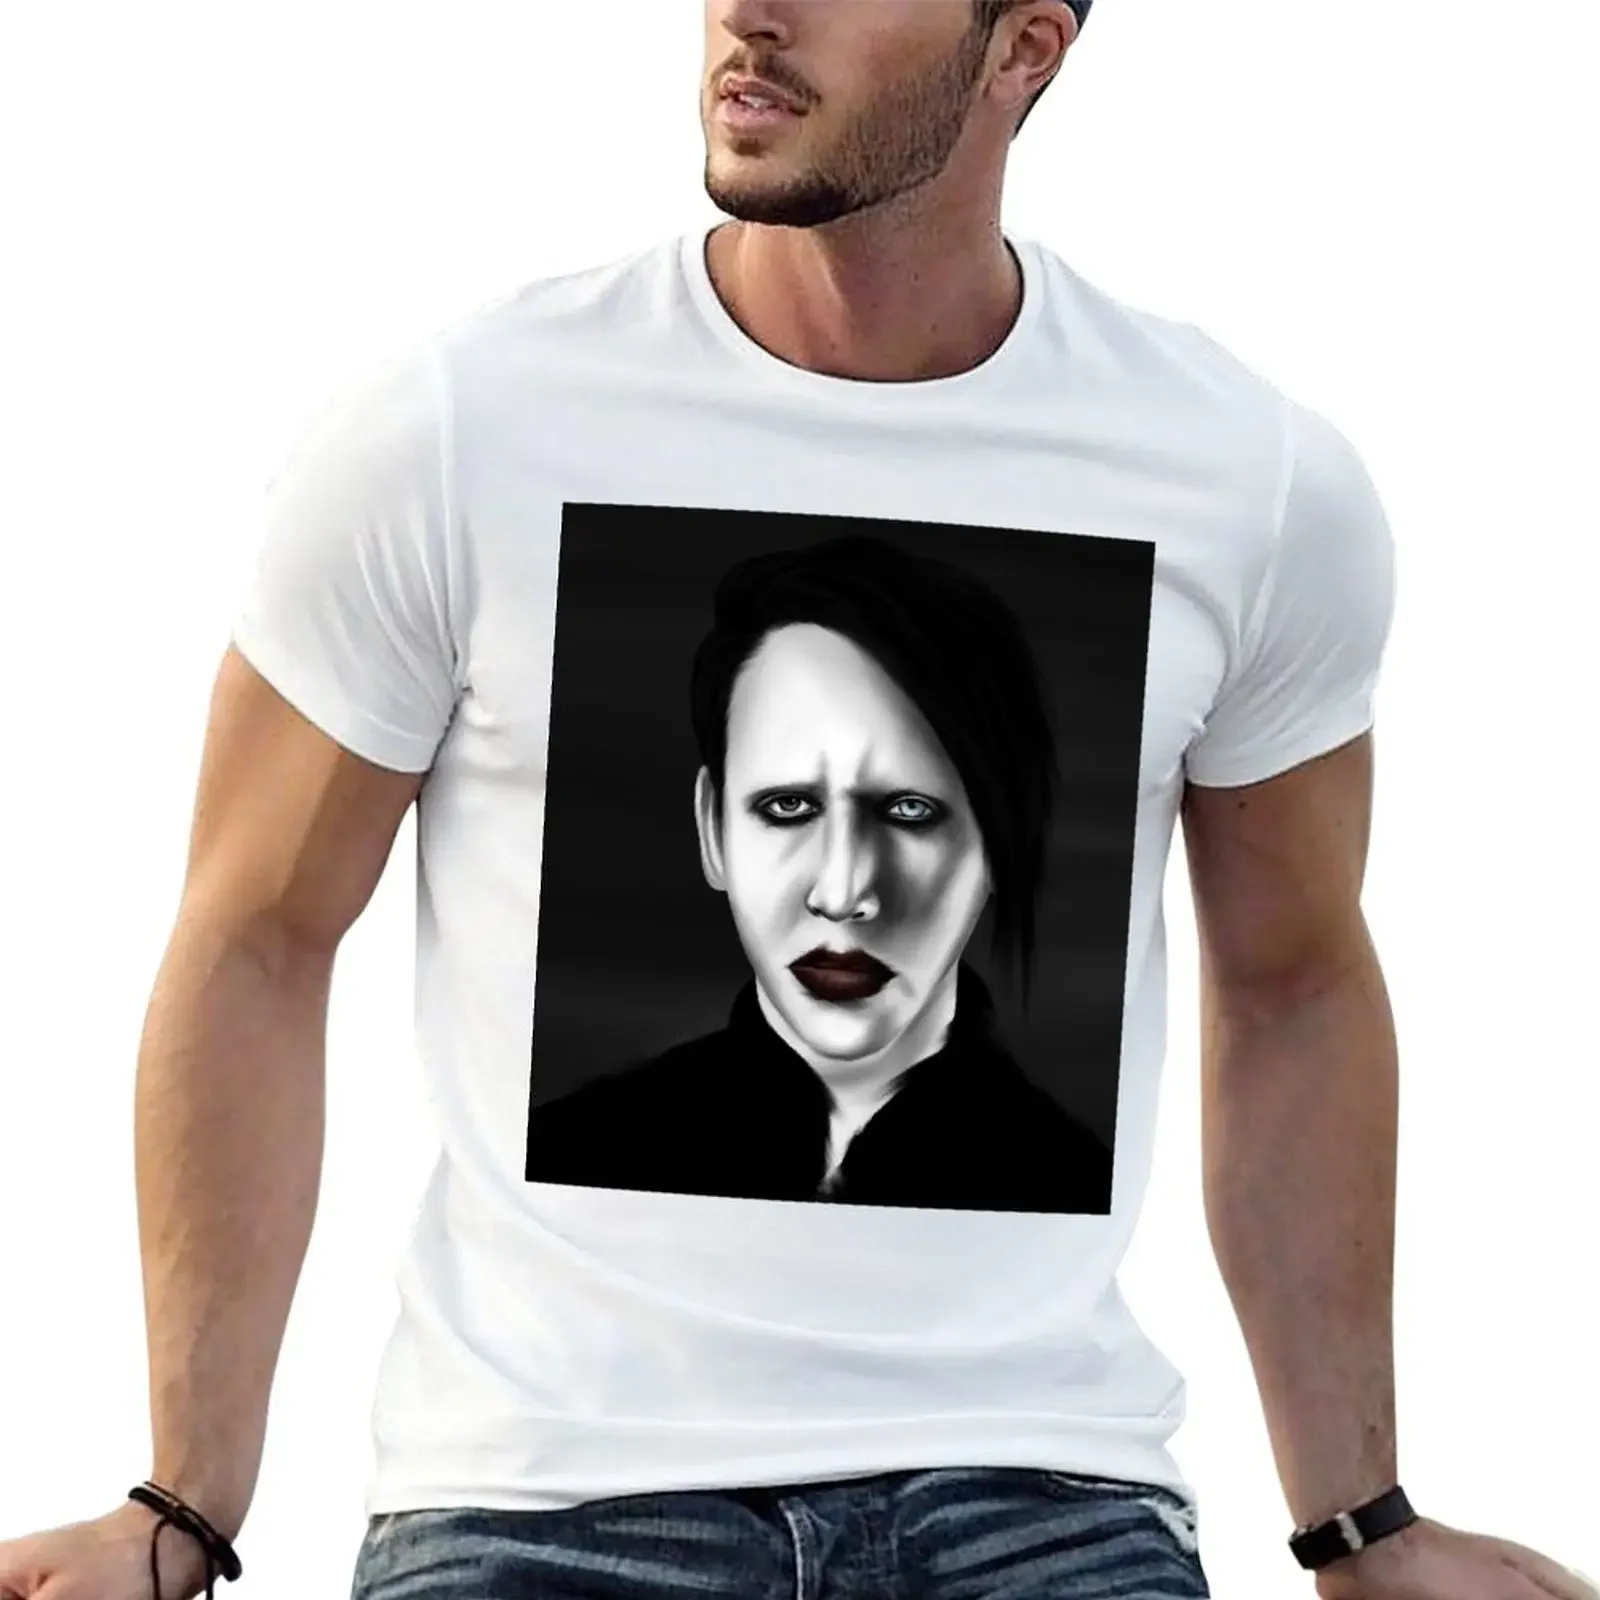 

Marilyn Manson Graphic Design T-shirt shirts graphic tees kawaii clothes cute clothes mens graphic t-shirts